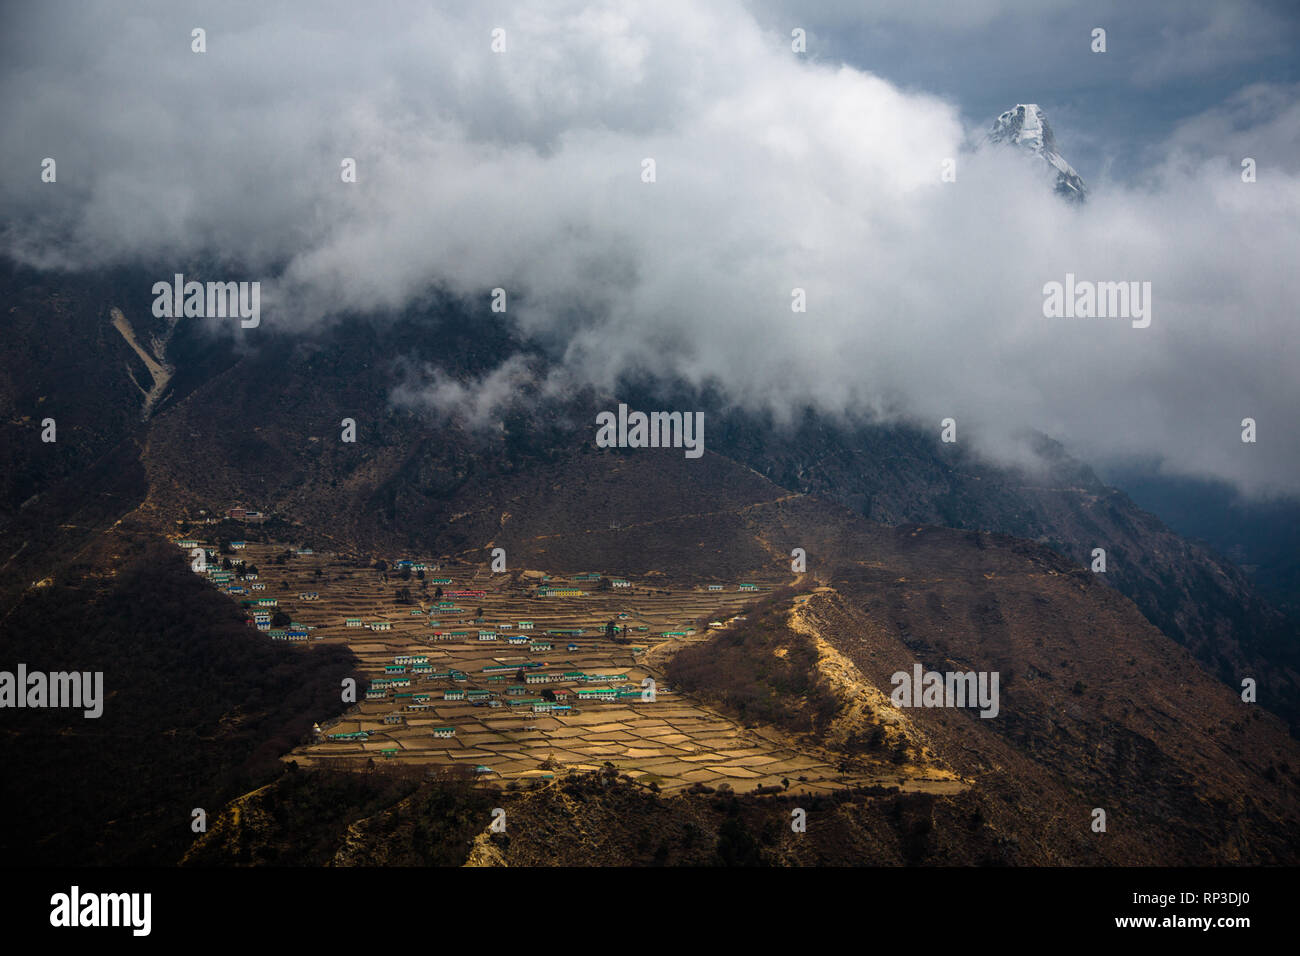 Light strikes Phortse village through misty clouds, Nepal Stock Photo